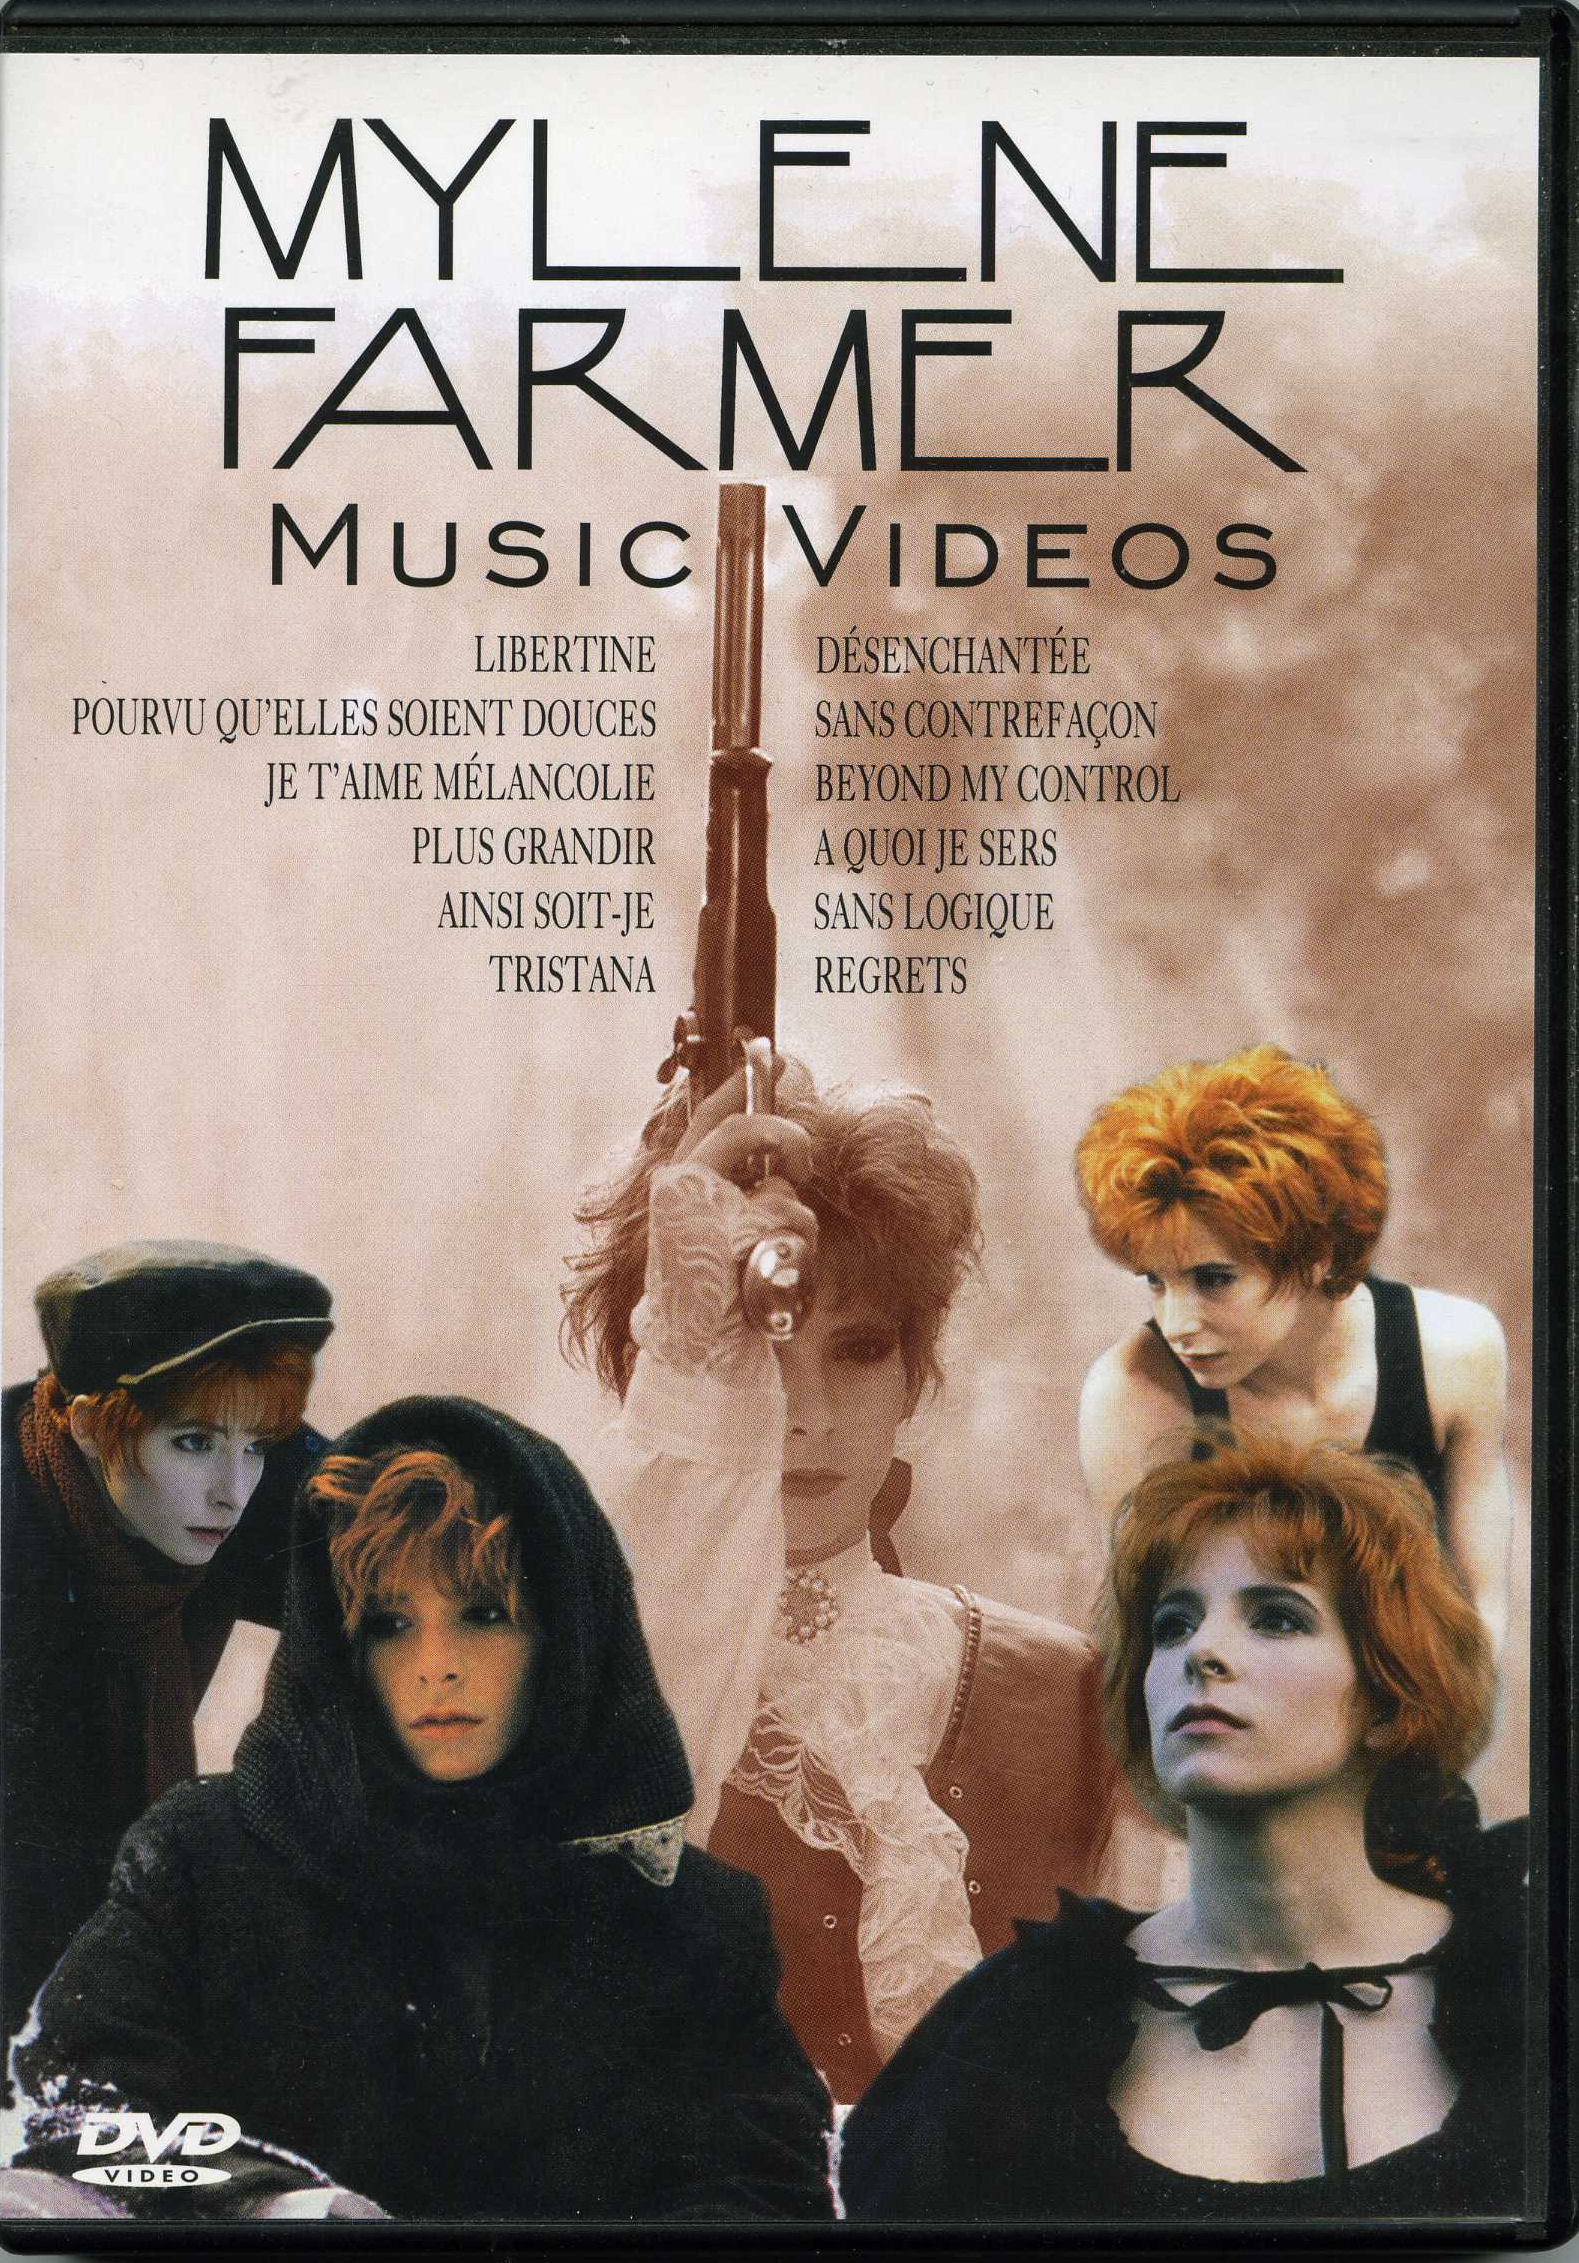 Music Vidéos DVD France